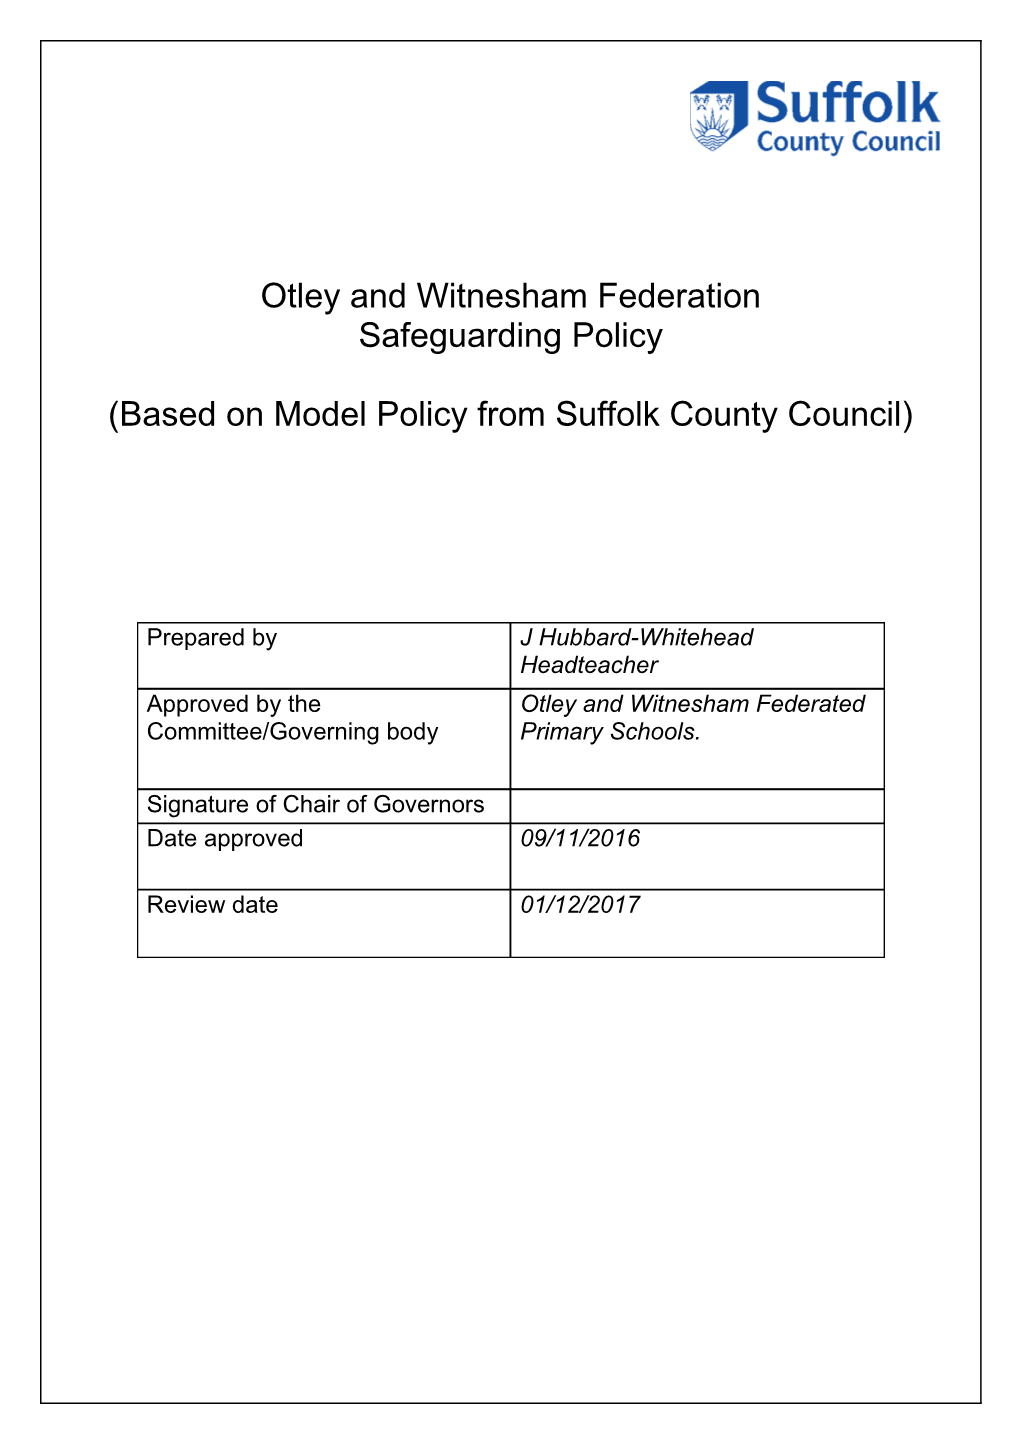 Otley and Witnesham Federation of Primary Schools